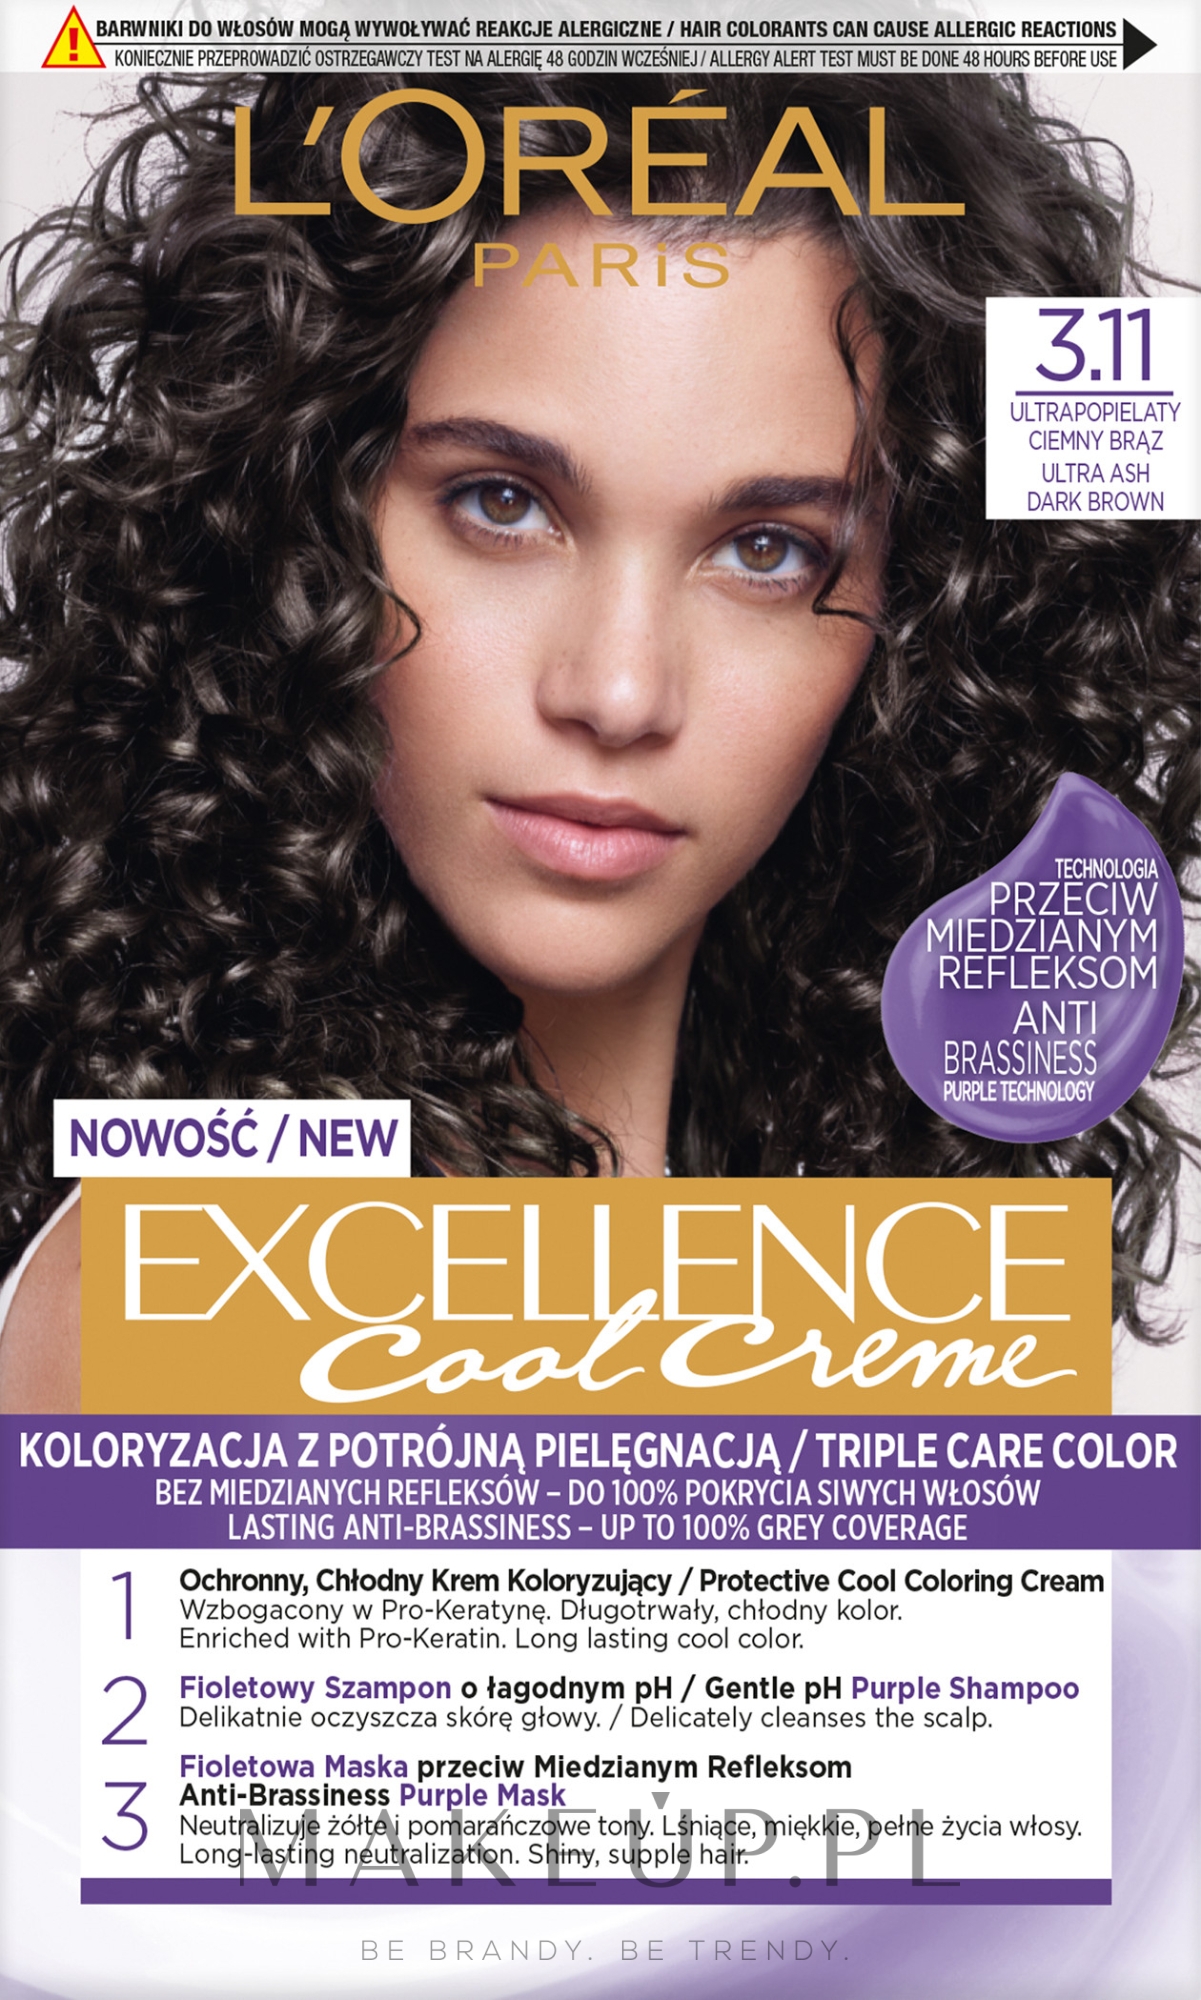 L'Oréal Paris Casting Creme Gloss Farba do włosów dla kobiet 48 ml